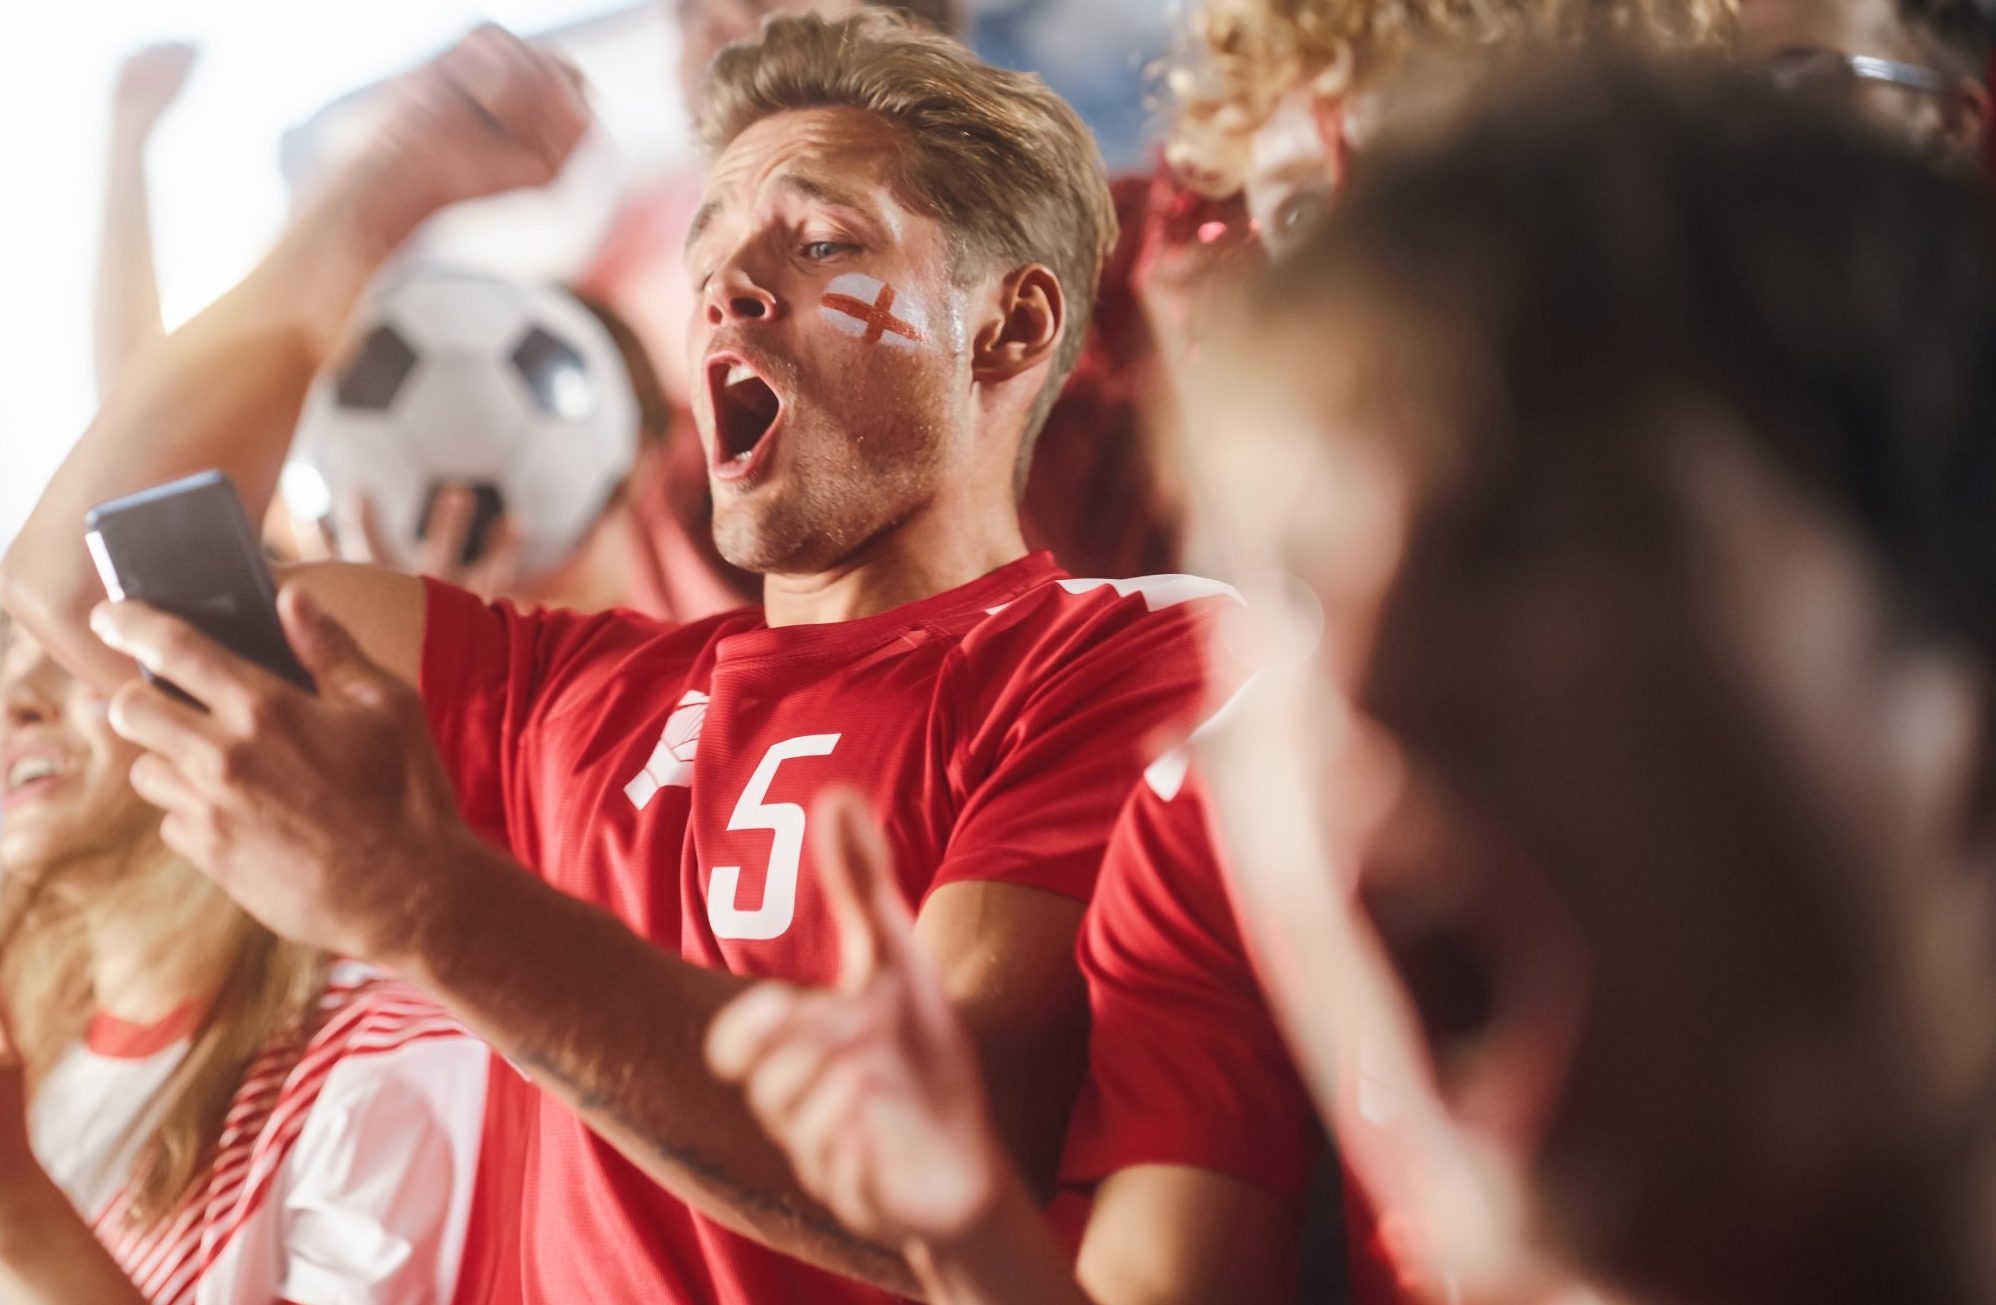 Sport Stadium Soccer Match: Caucasian Man Using Smartphone Cheer